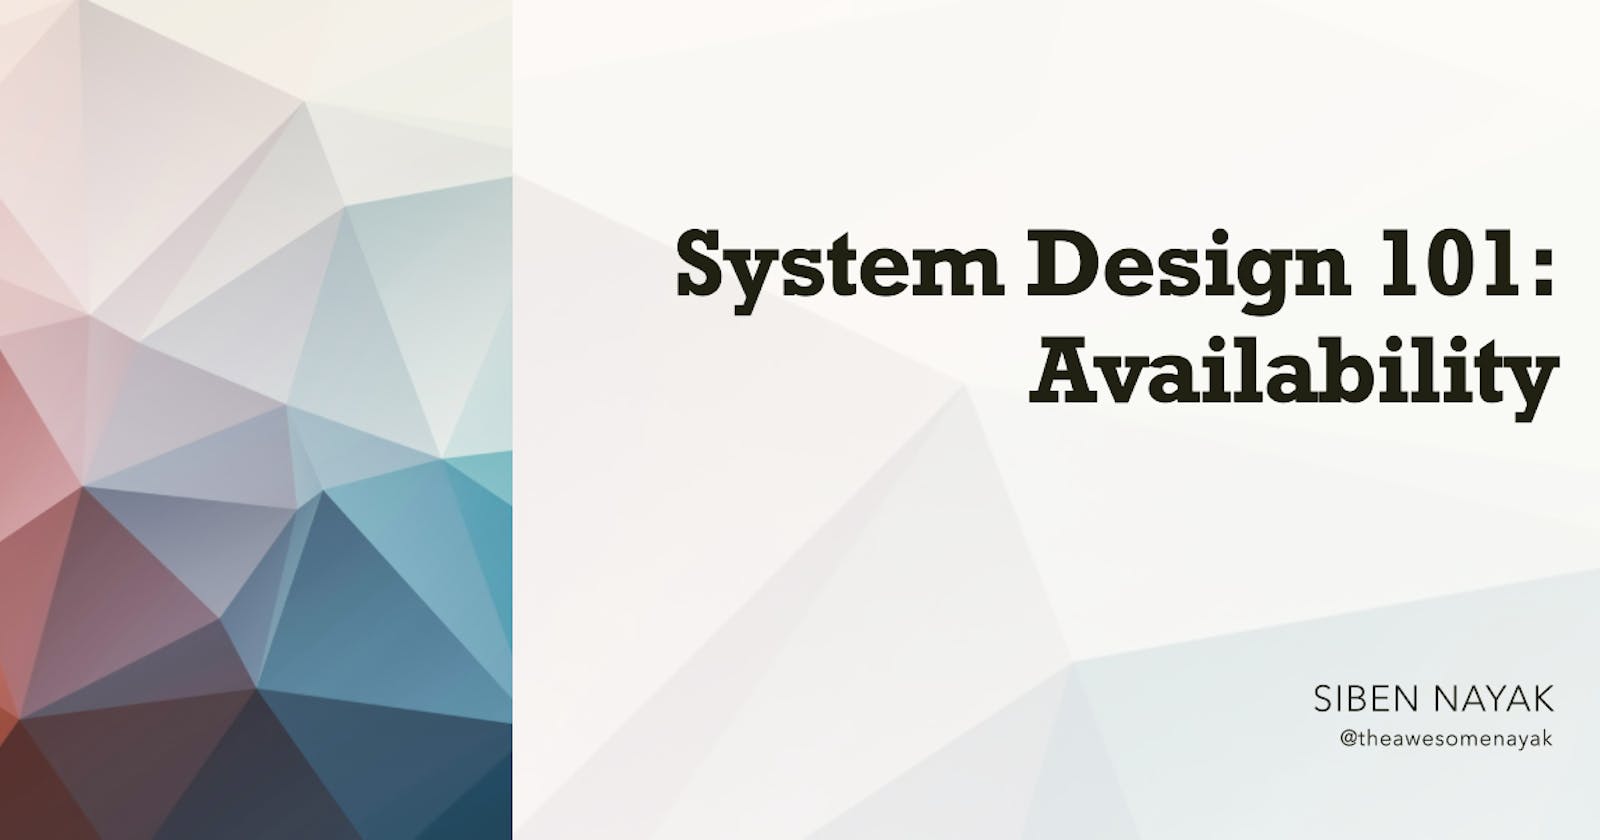 System Design 101 - Availability